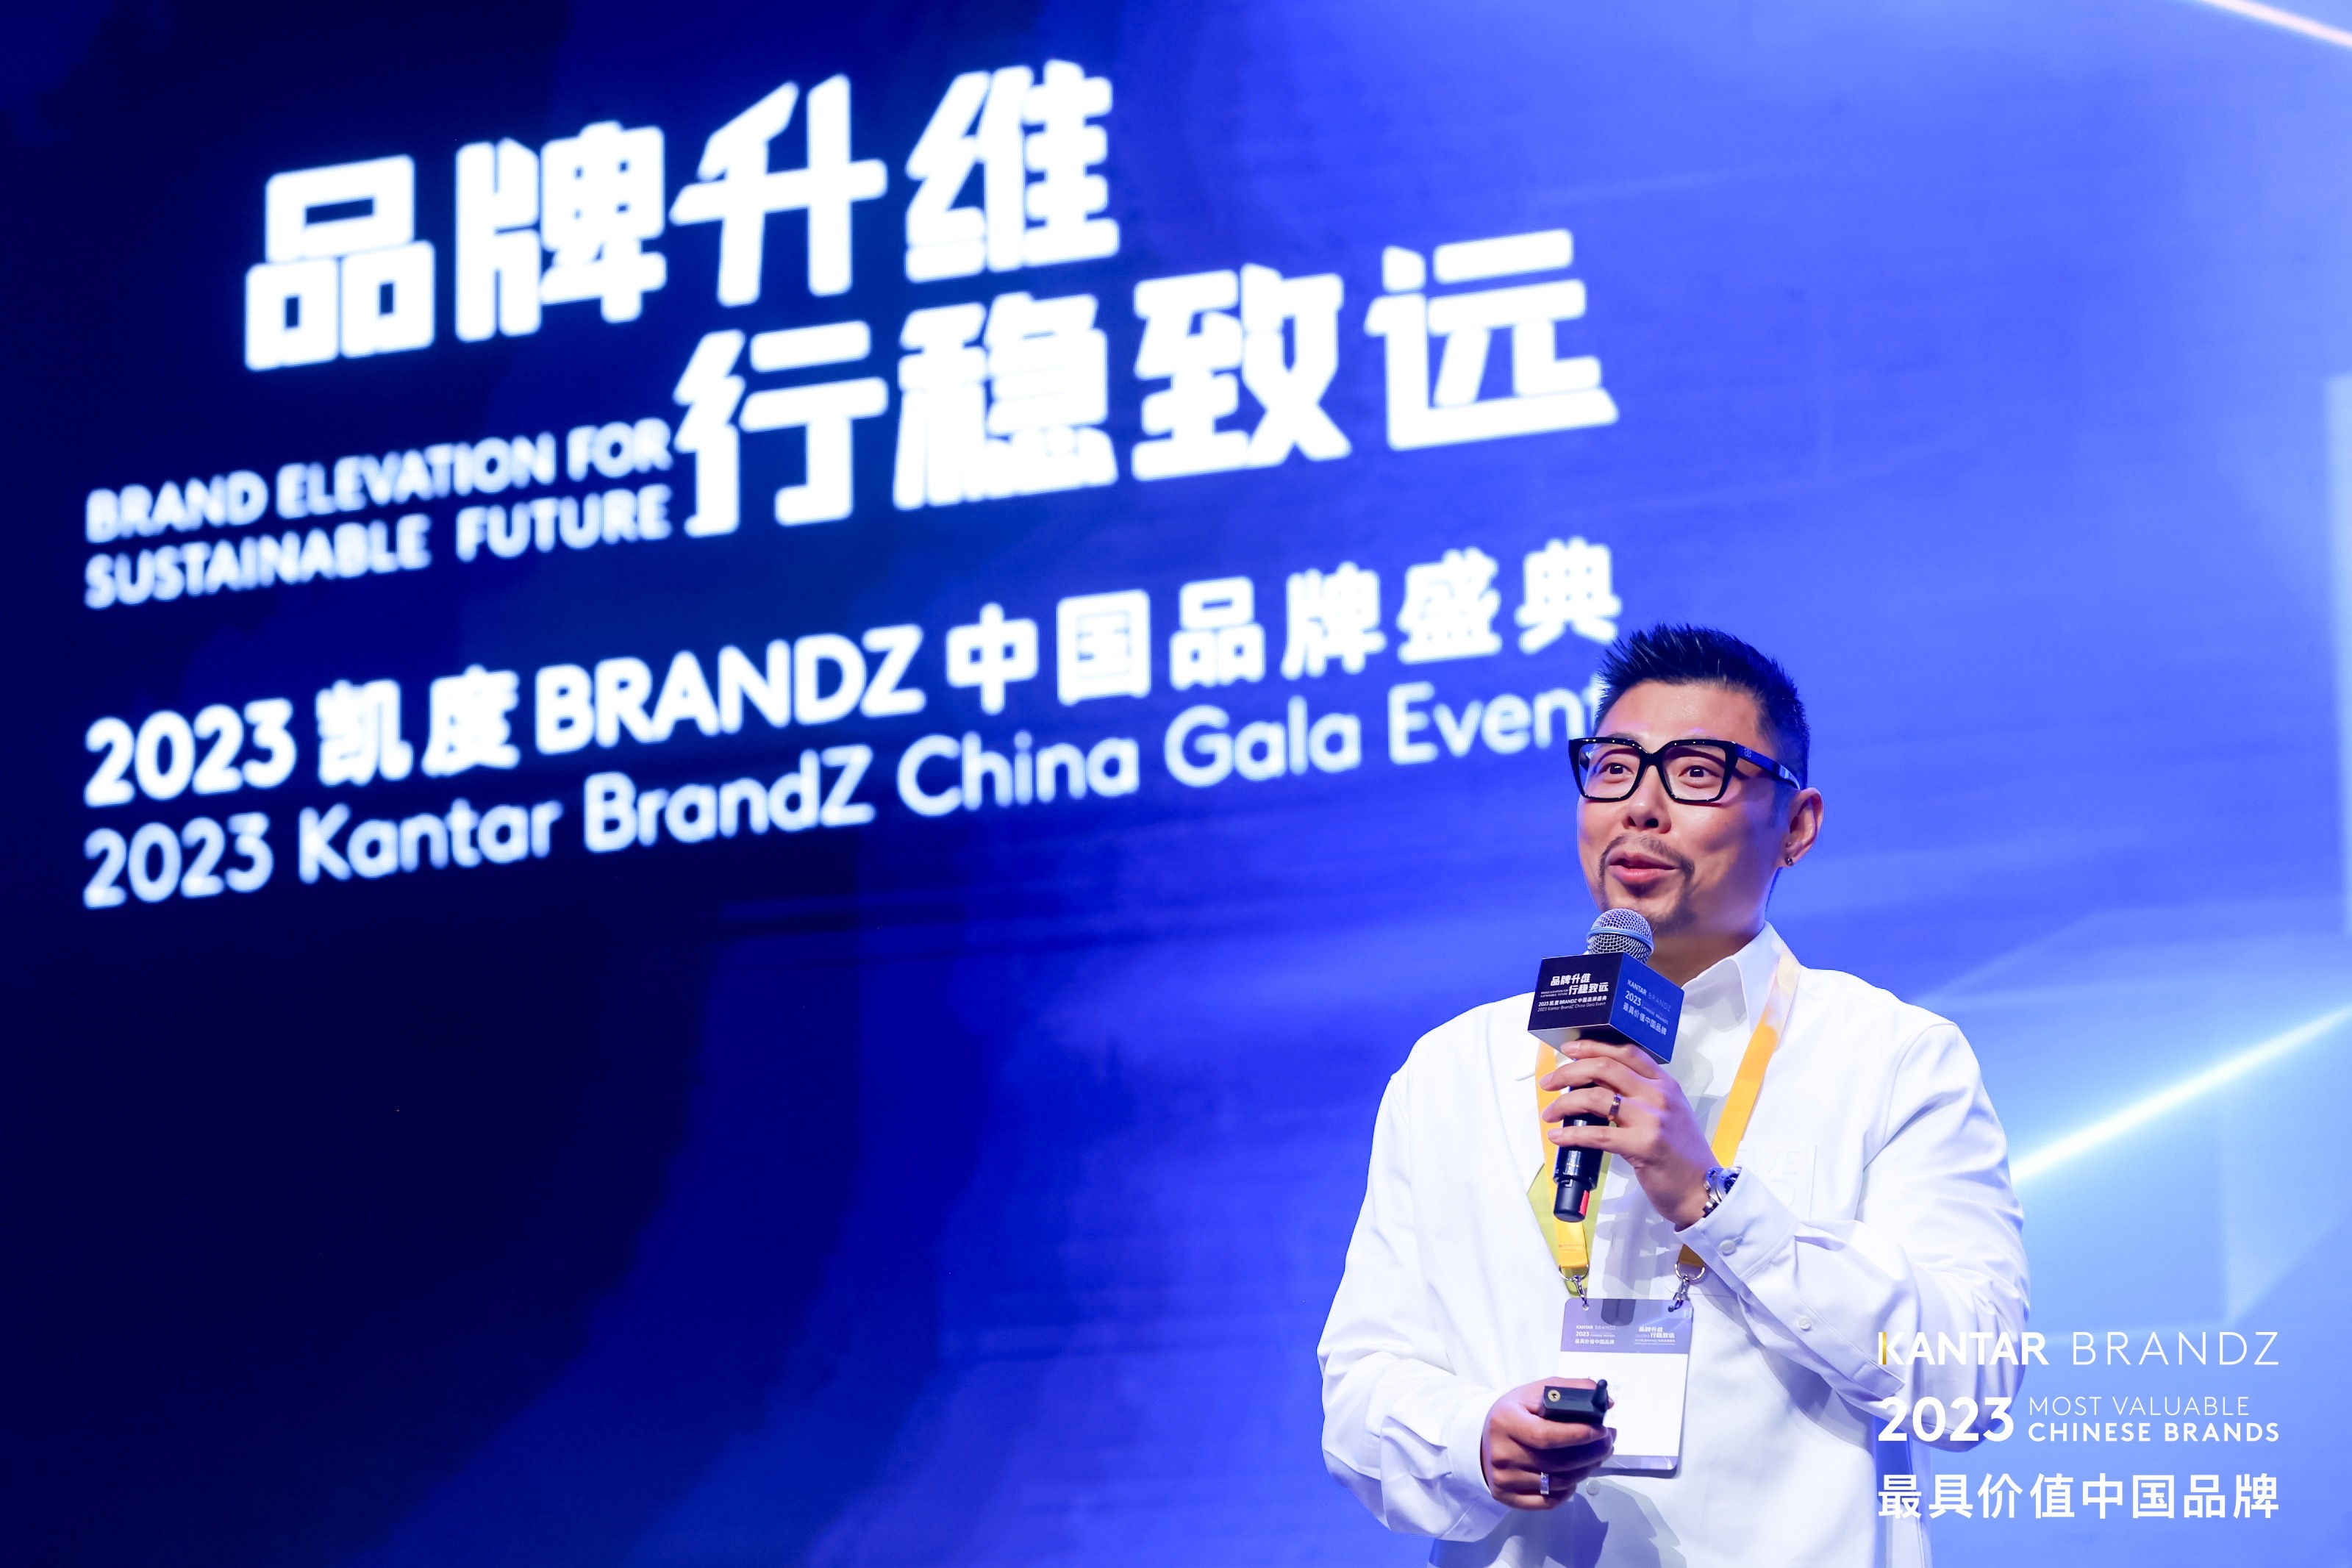 Harbin Beer Regains Prestigious Listing in 2023 Kantar BrandZ Top 100 Most Valuable Chinese Brands